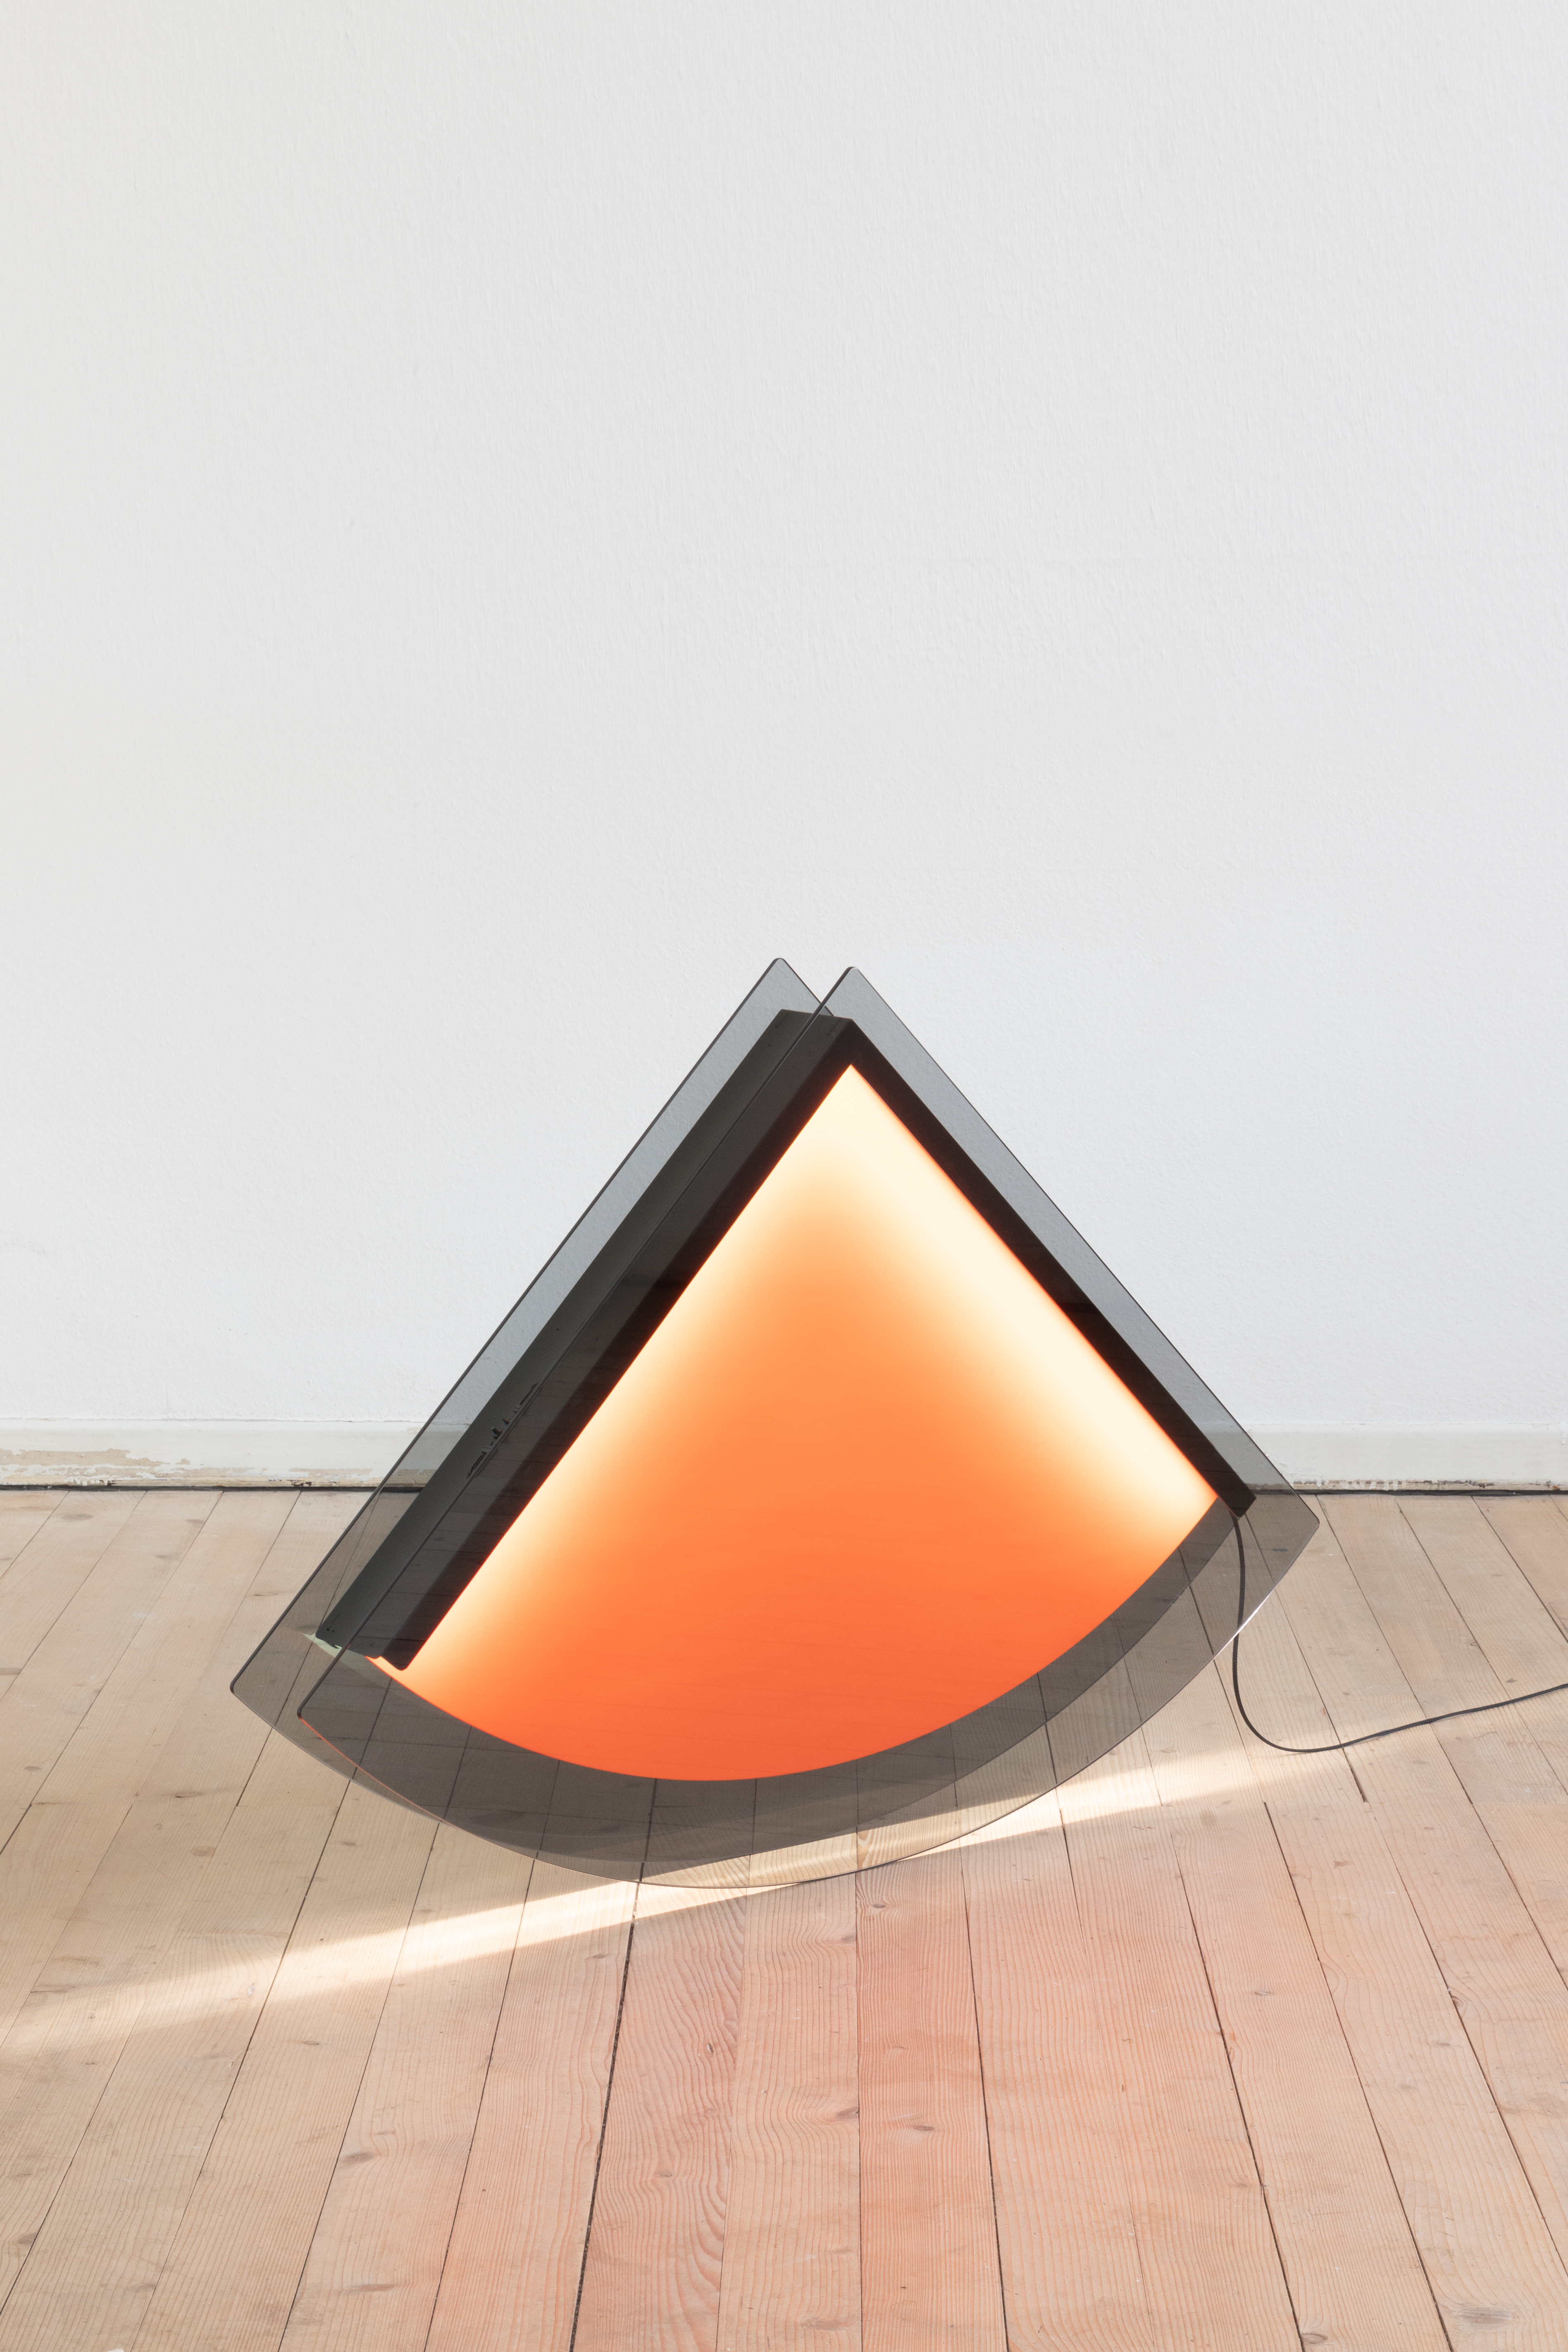 Christoph Hauf, *Mid-Rise*, glass, aluminium, led panel, 105×74×10cm